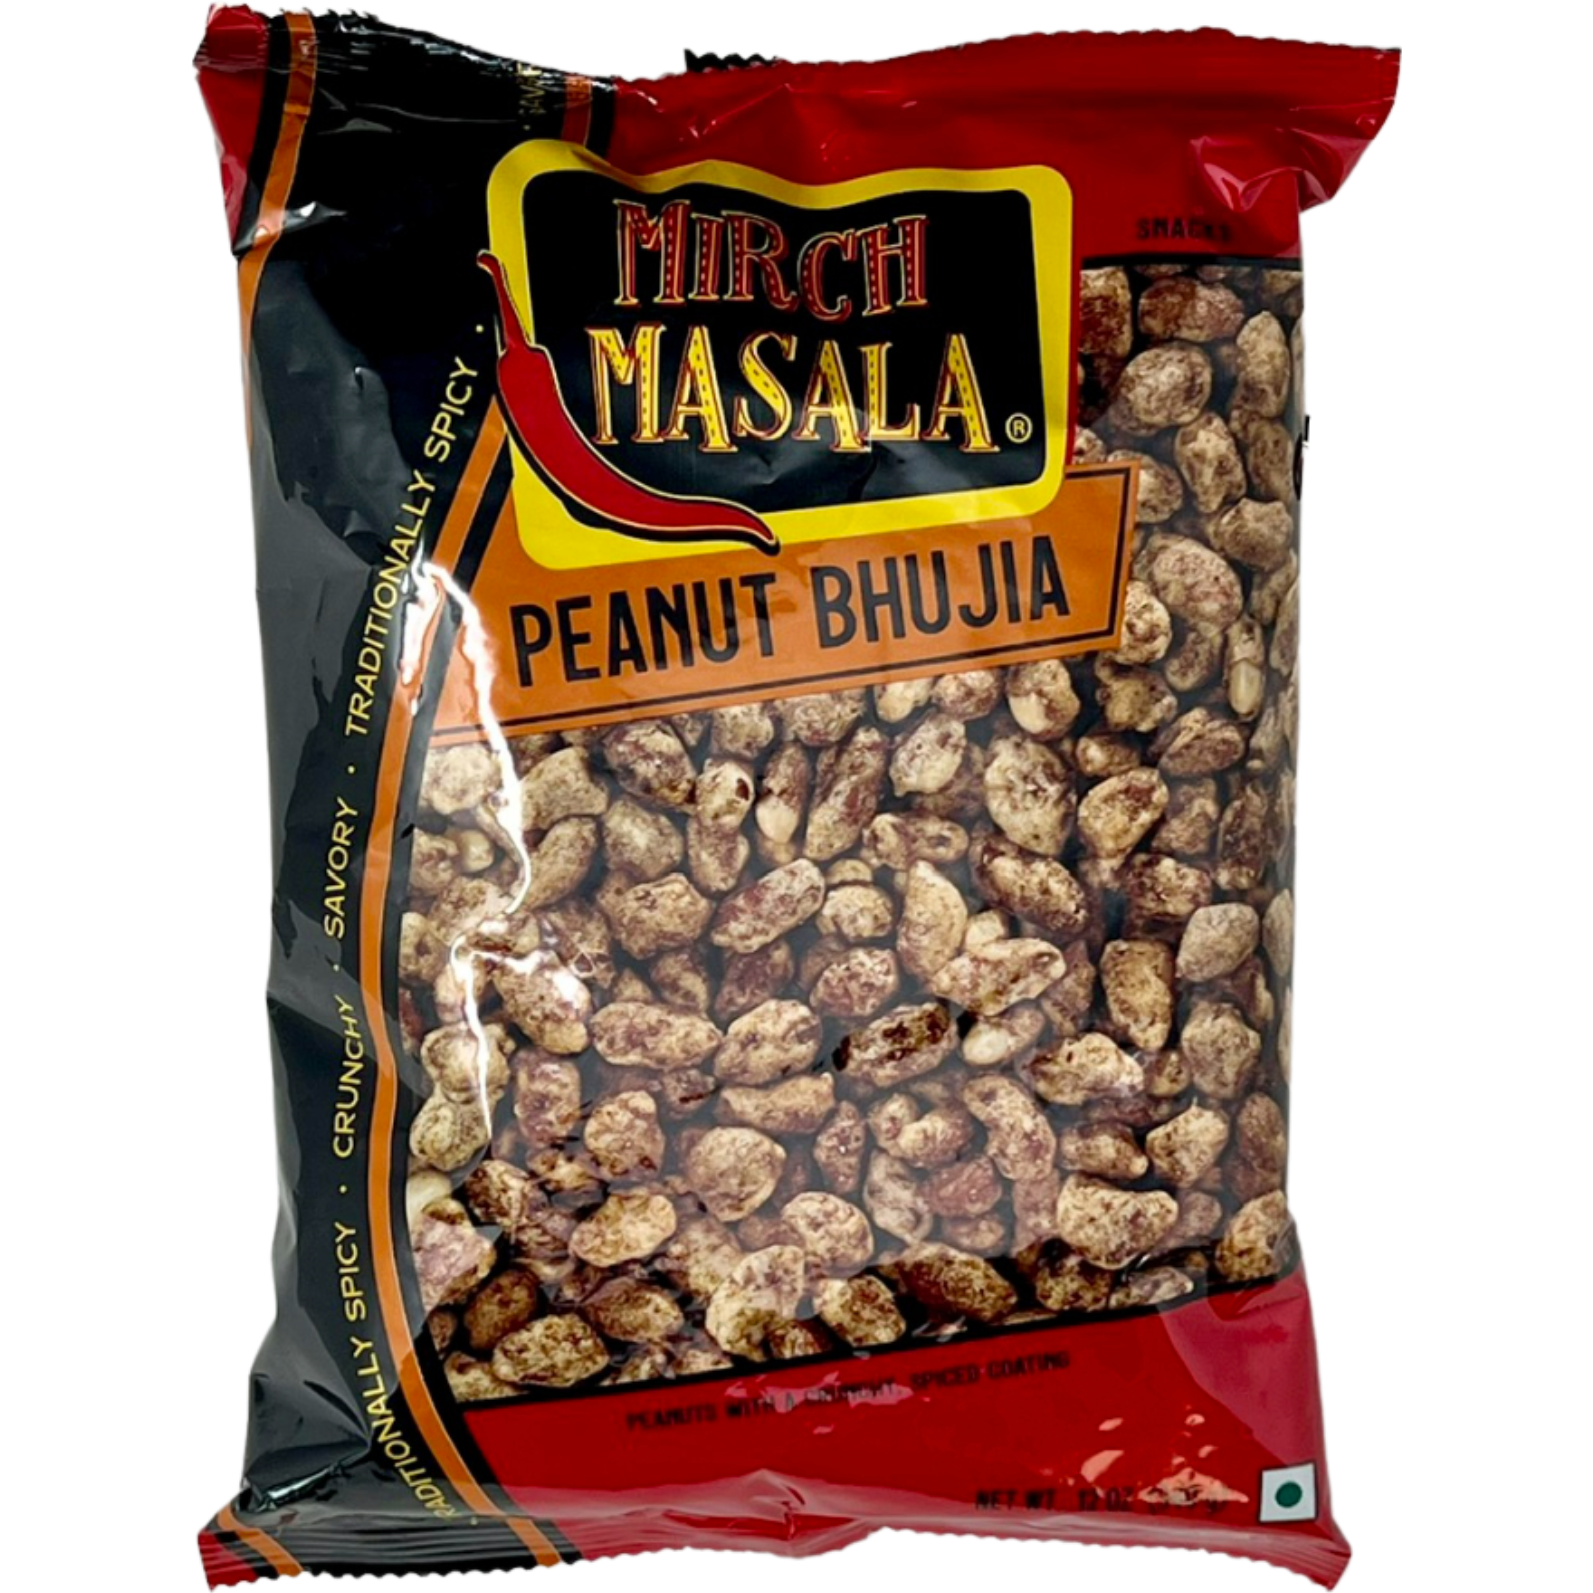 Pack of 2 - Mirch Masala Peanut Bhujia - 12 Oz (340 Gm)